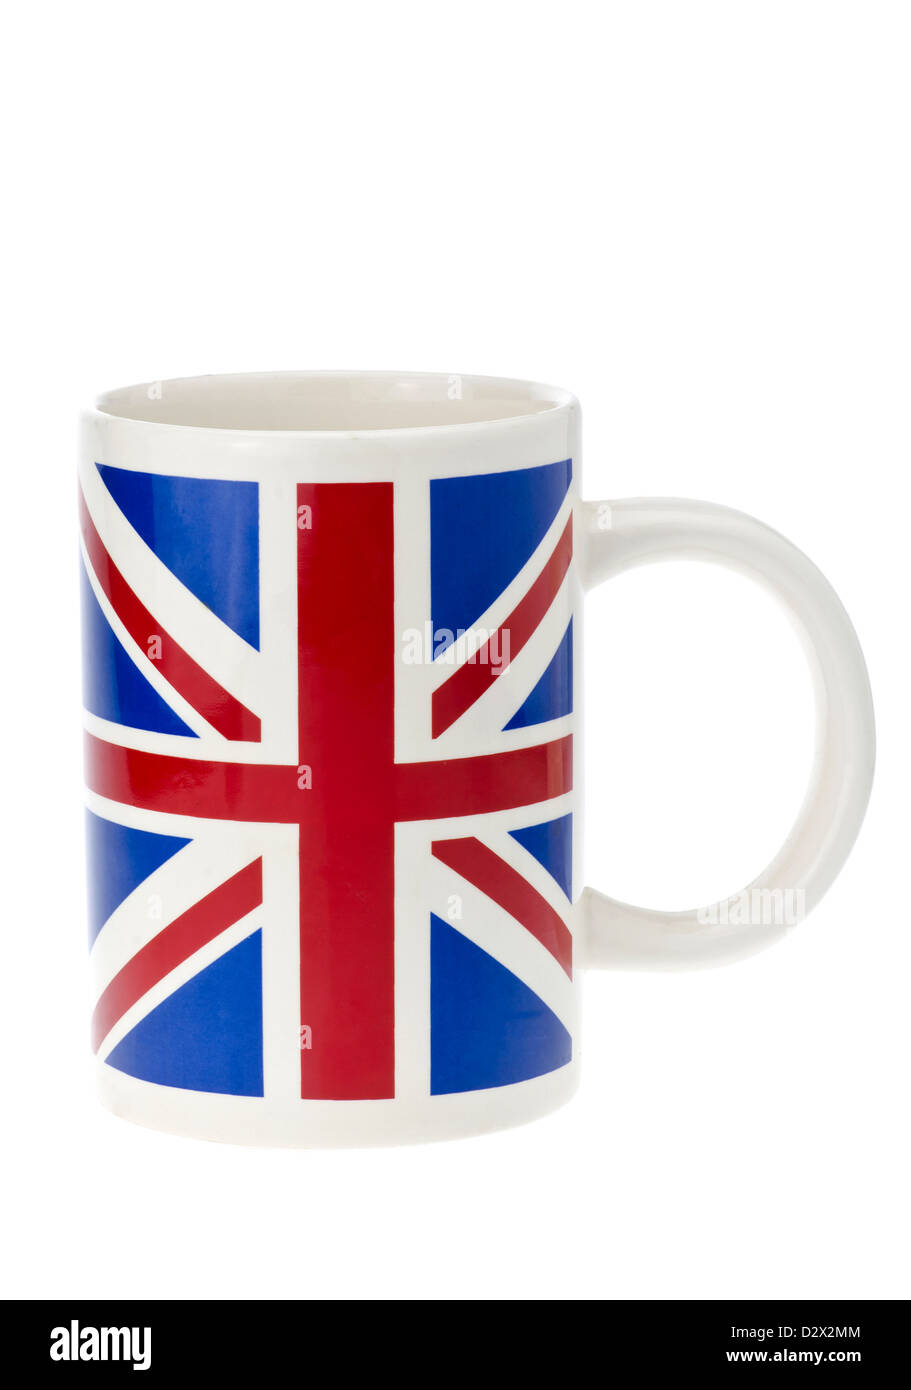 Tazza CBK motivo Londra e bandiera inglese Union Jack 